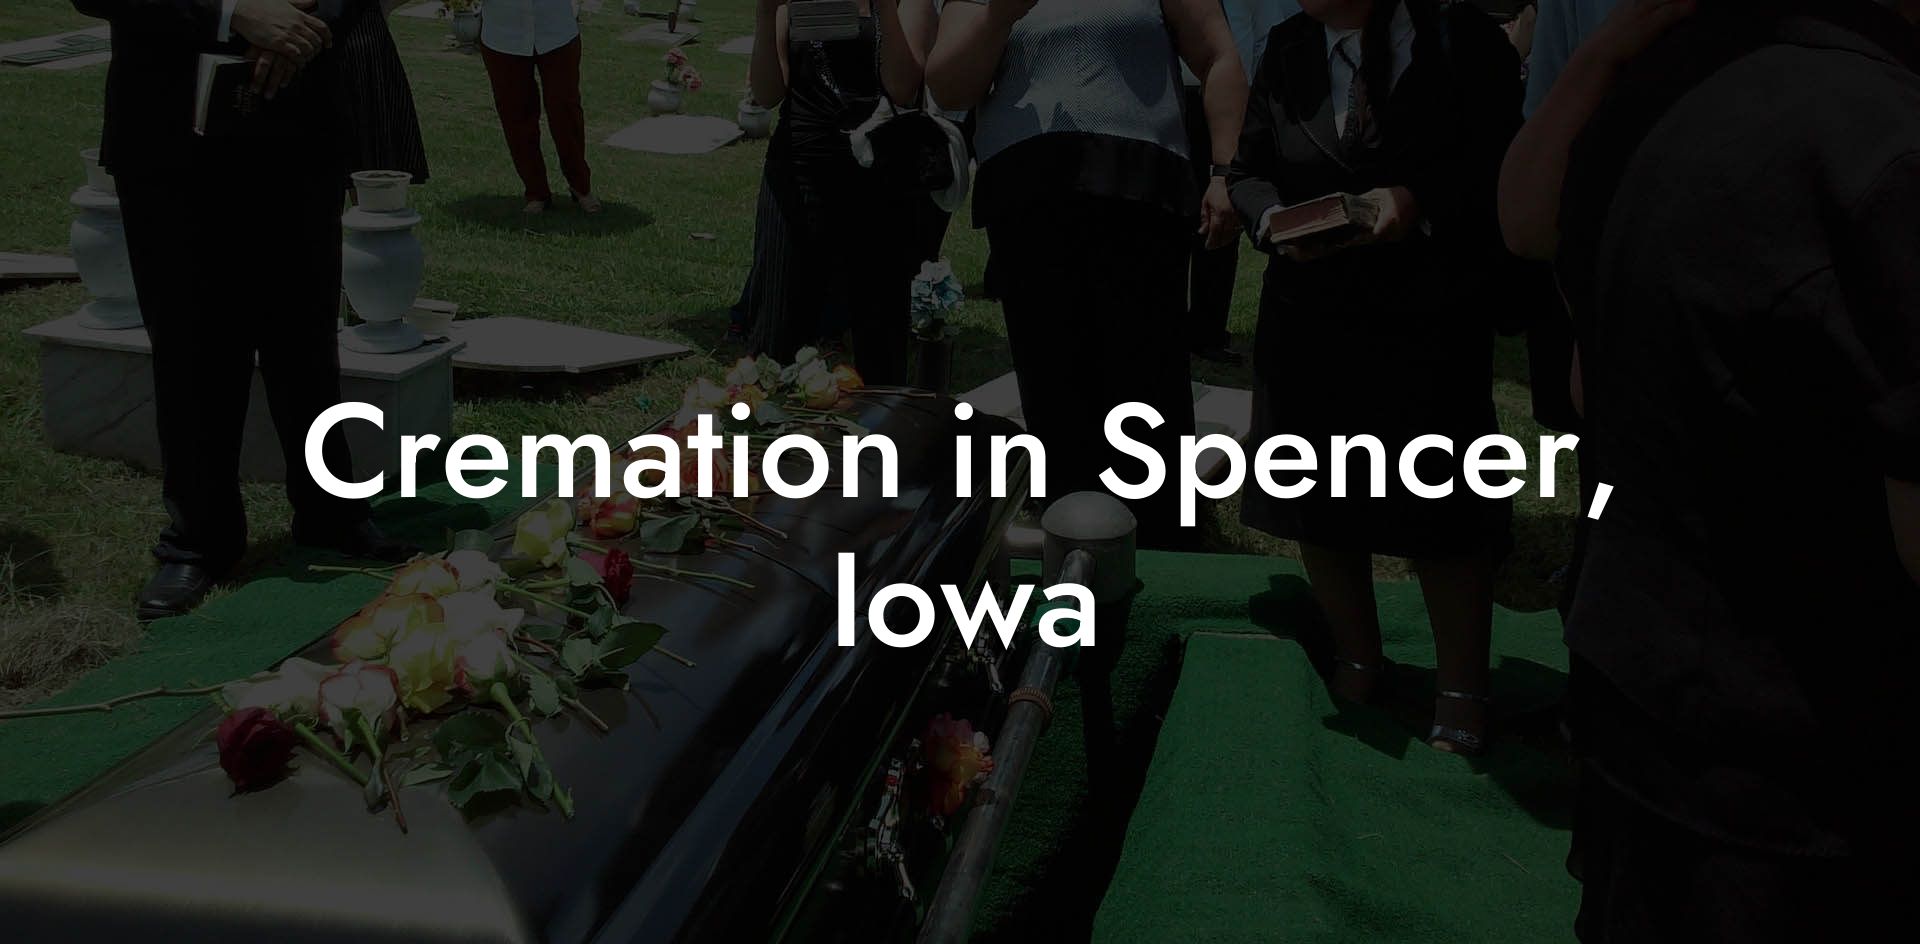 Cremation in Spencer, Iowa